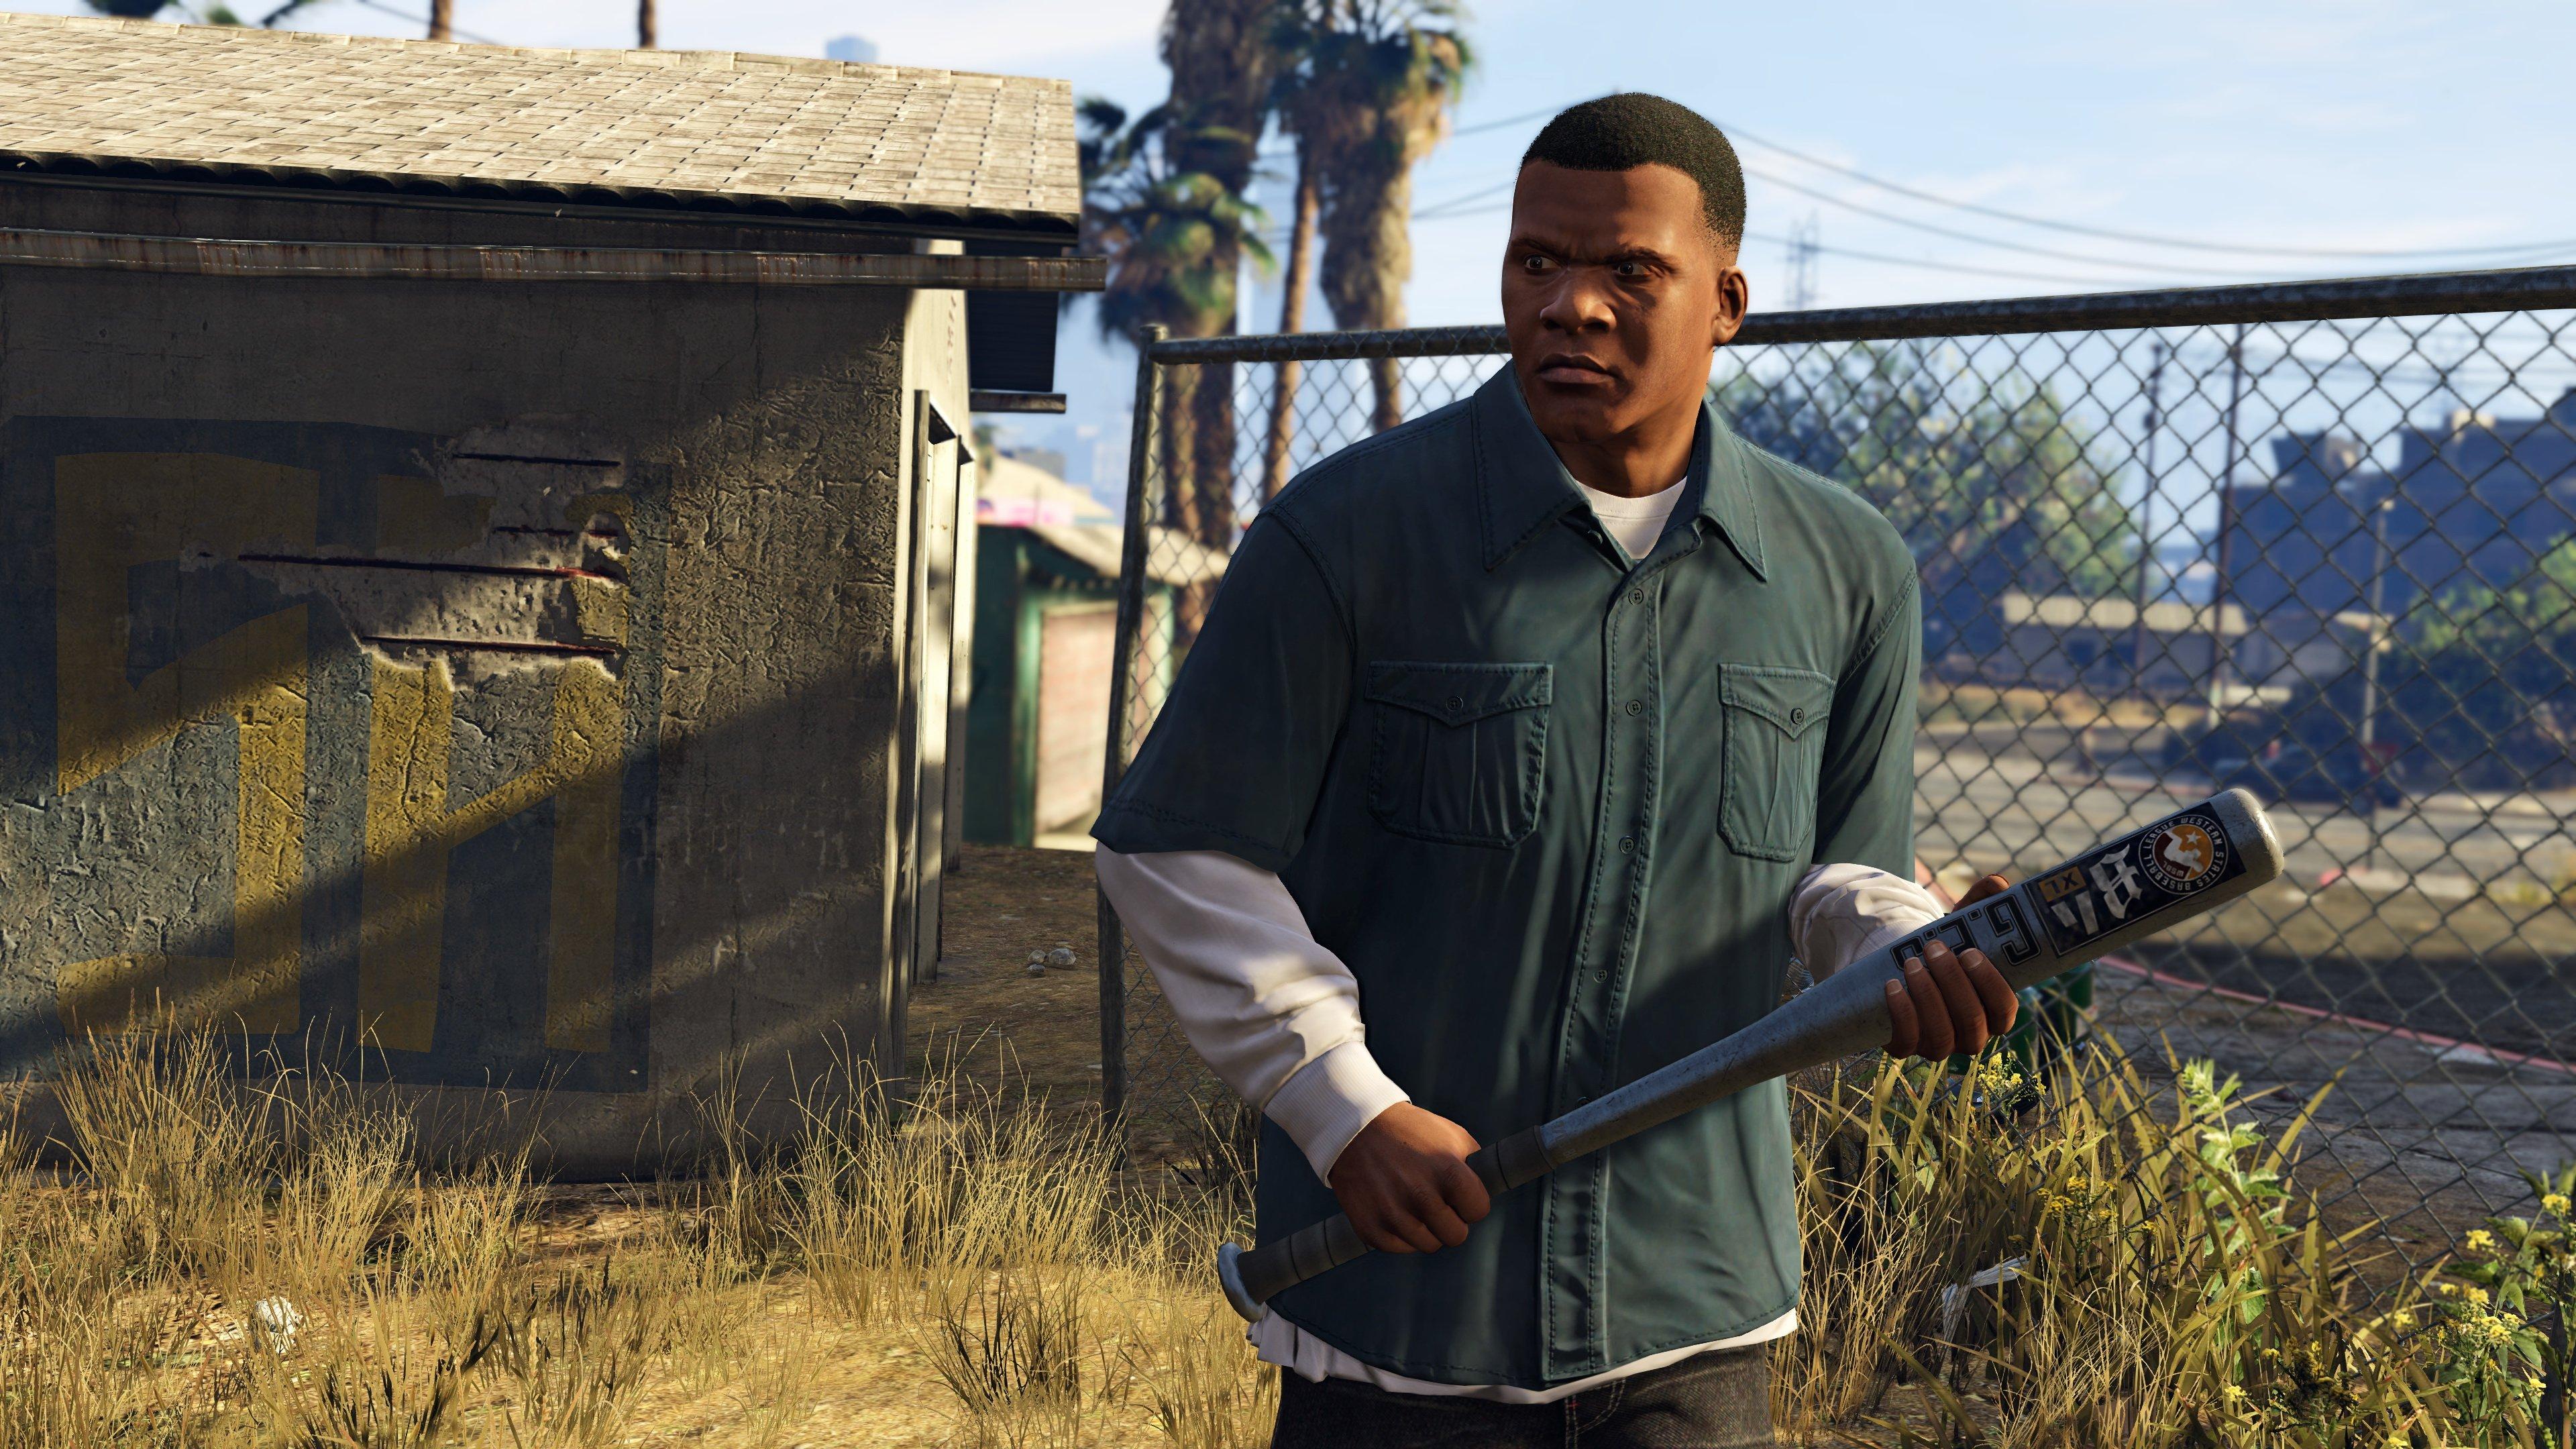 Grand Theft Auto V - PlayStation 3